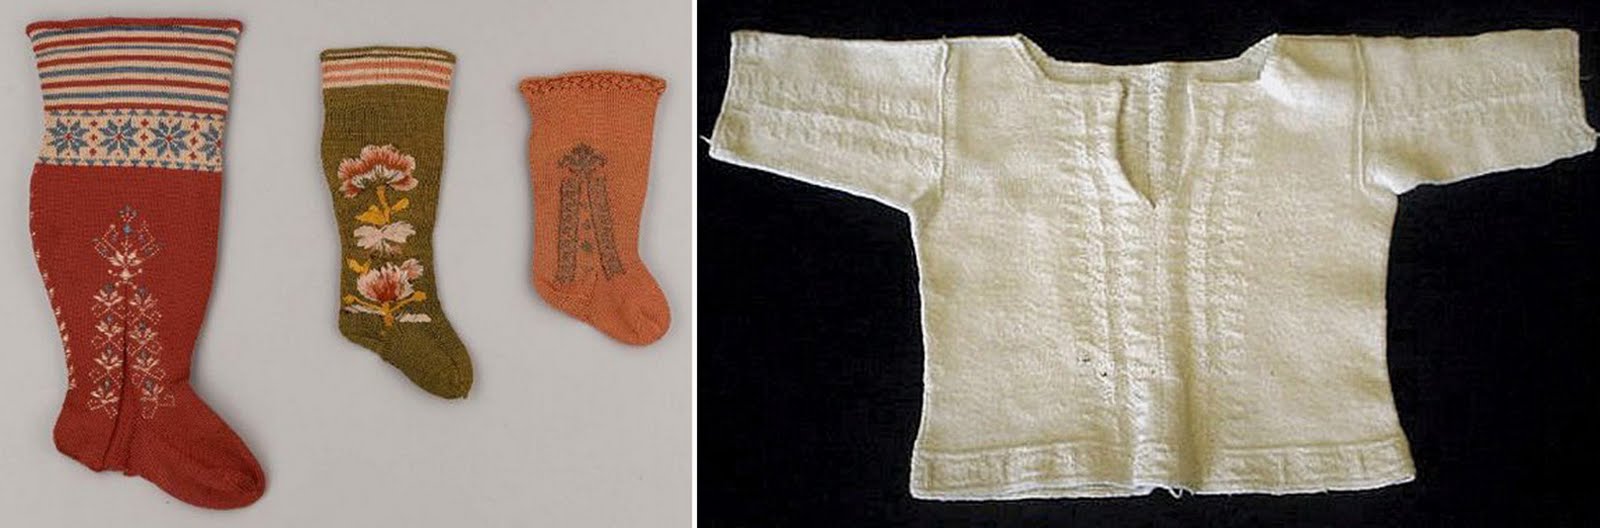 Chemise veste d enfant en coton tricoté XVIIe si¨cle Album Knitting Items from the Collection Victoria and Albert Museum Londres